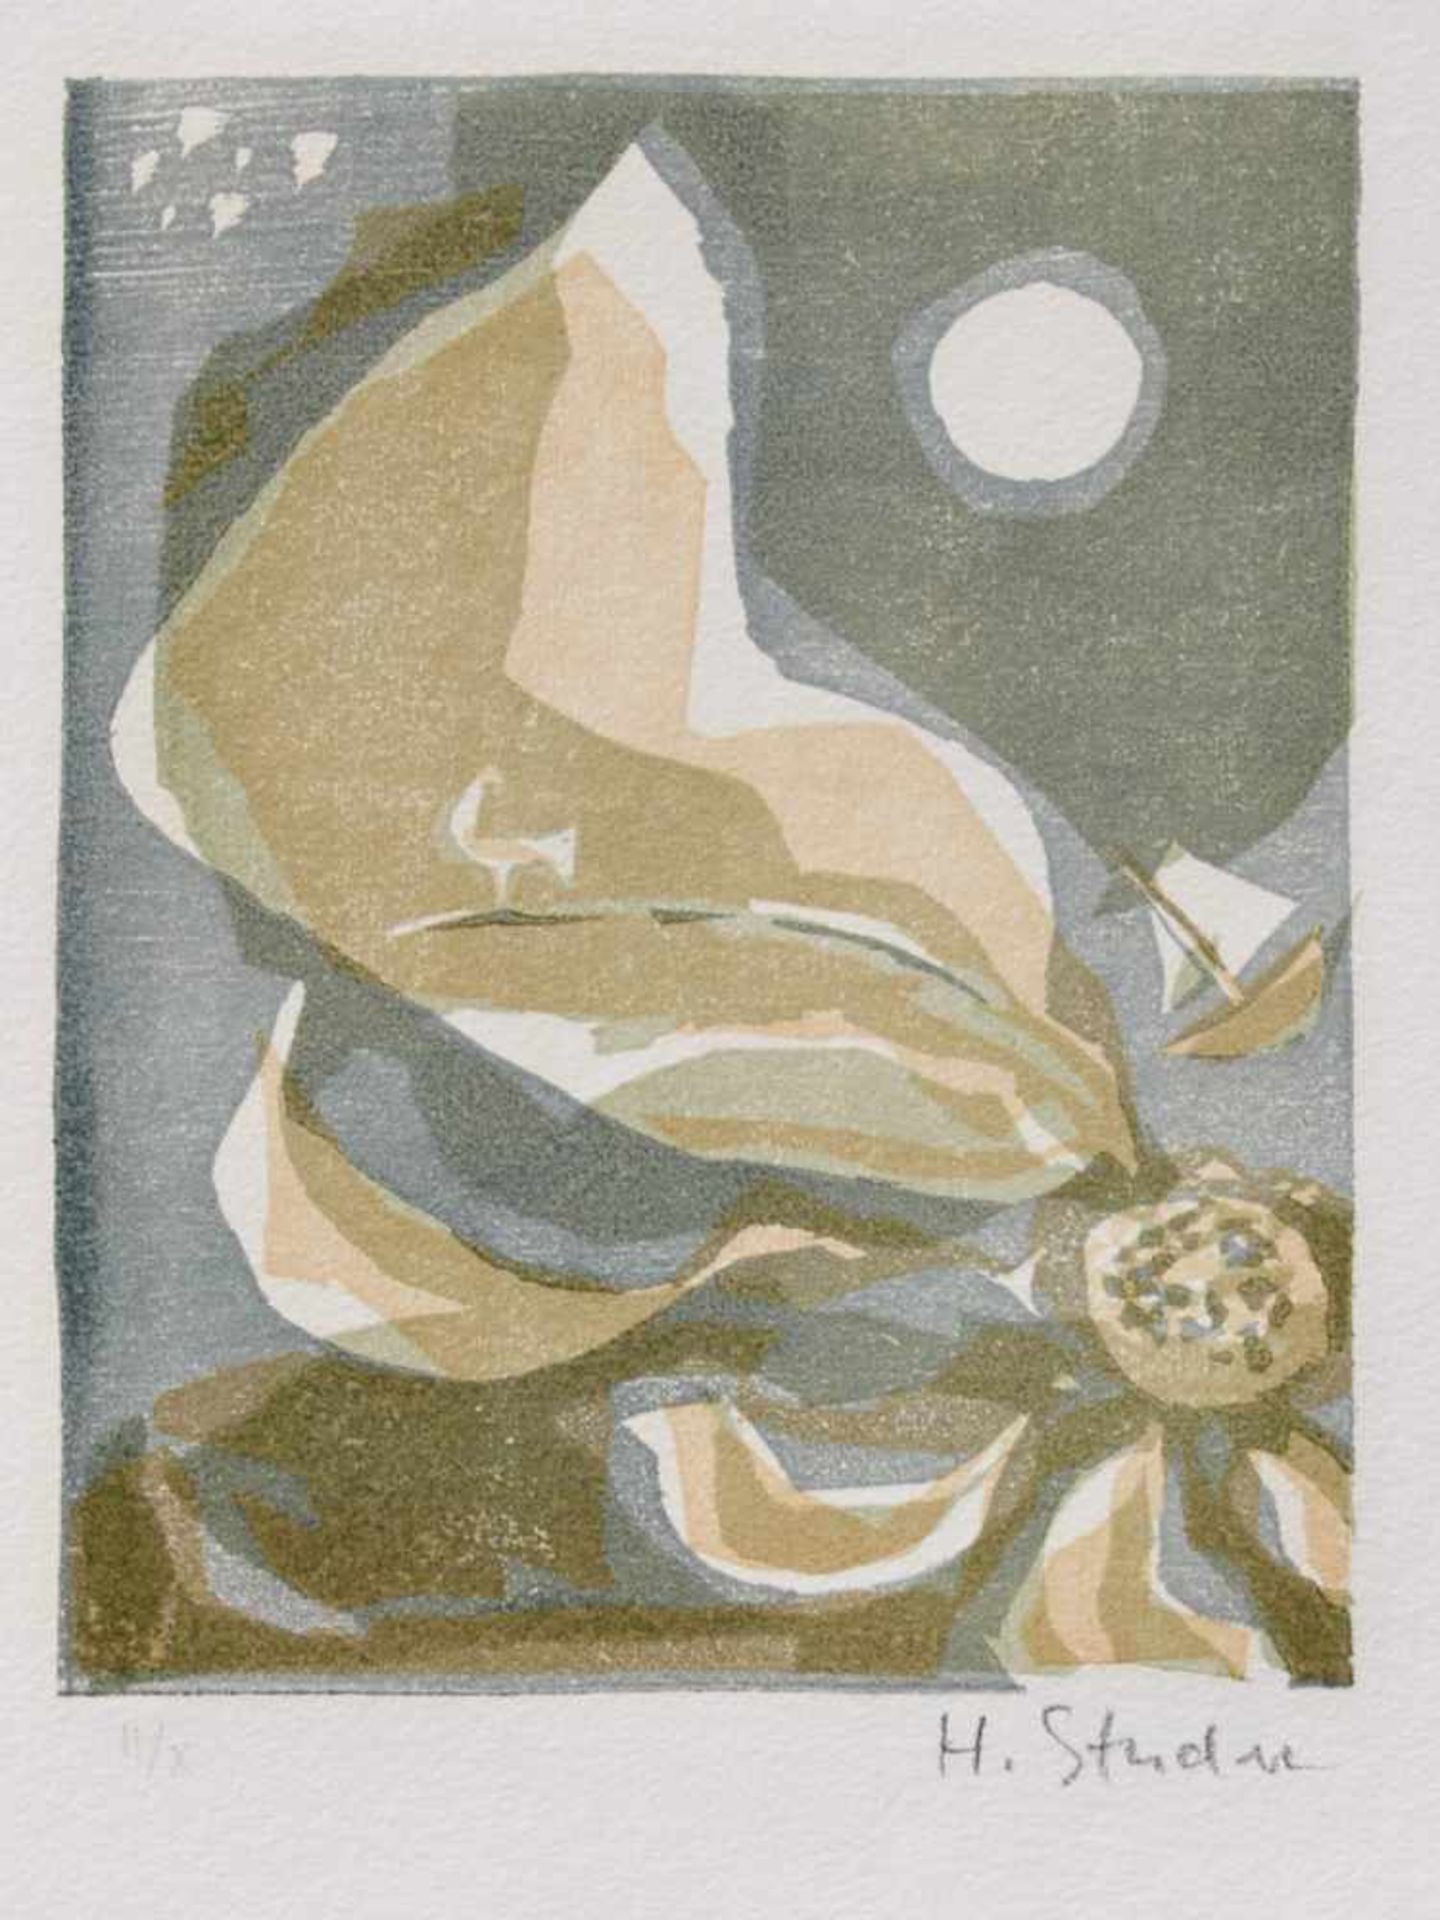 Arcade-Presse - Studer - Petrarca, F.,Sonette. Zrich (1966). 27 x 18,6 cm. Mit 9 - Bild 6 aus 6